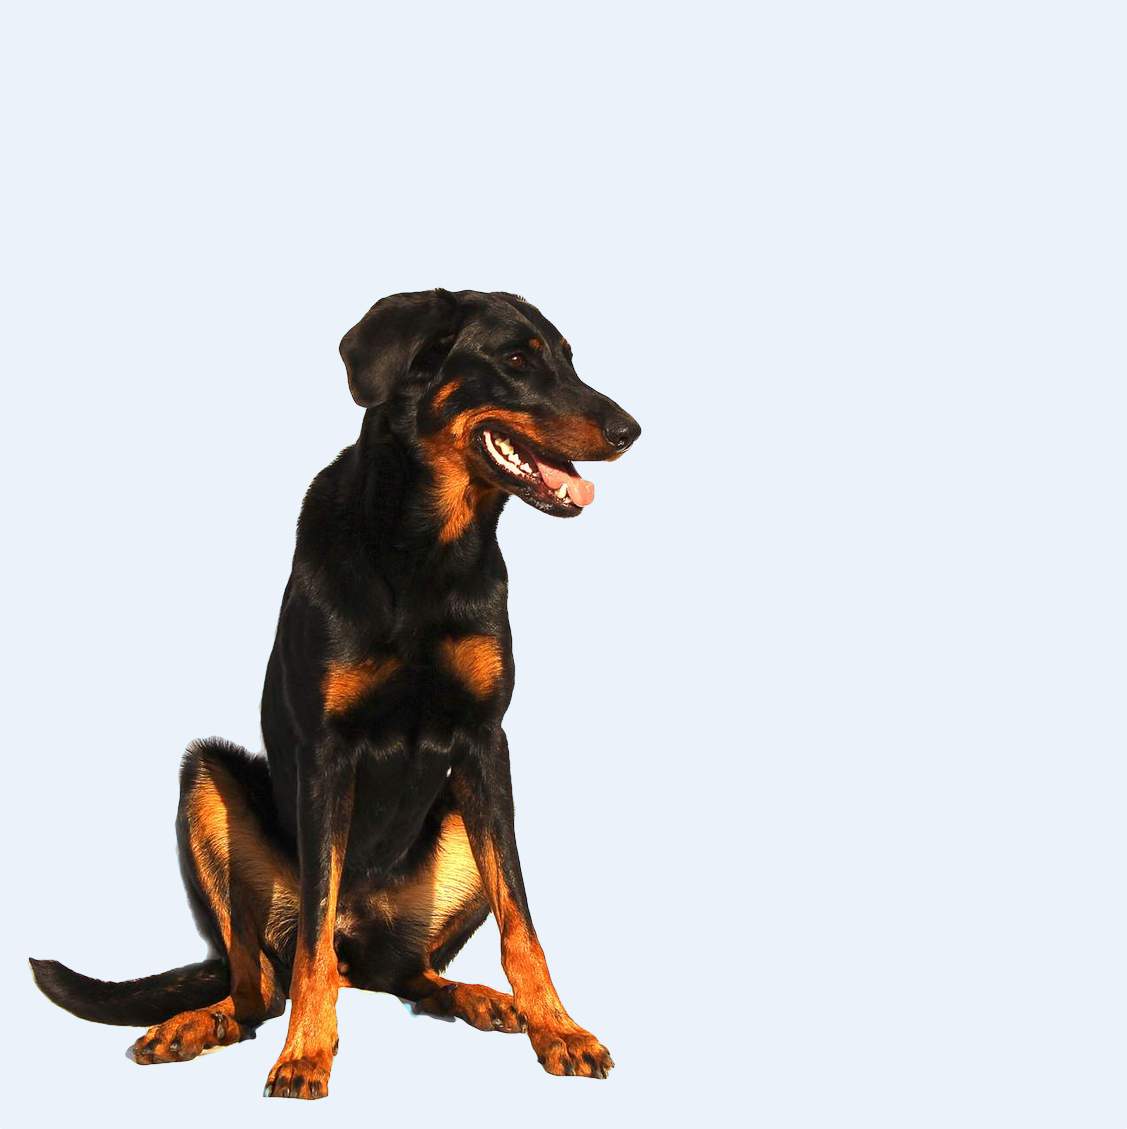 A black and tan dog sitting.